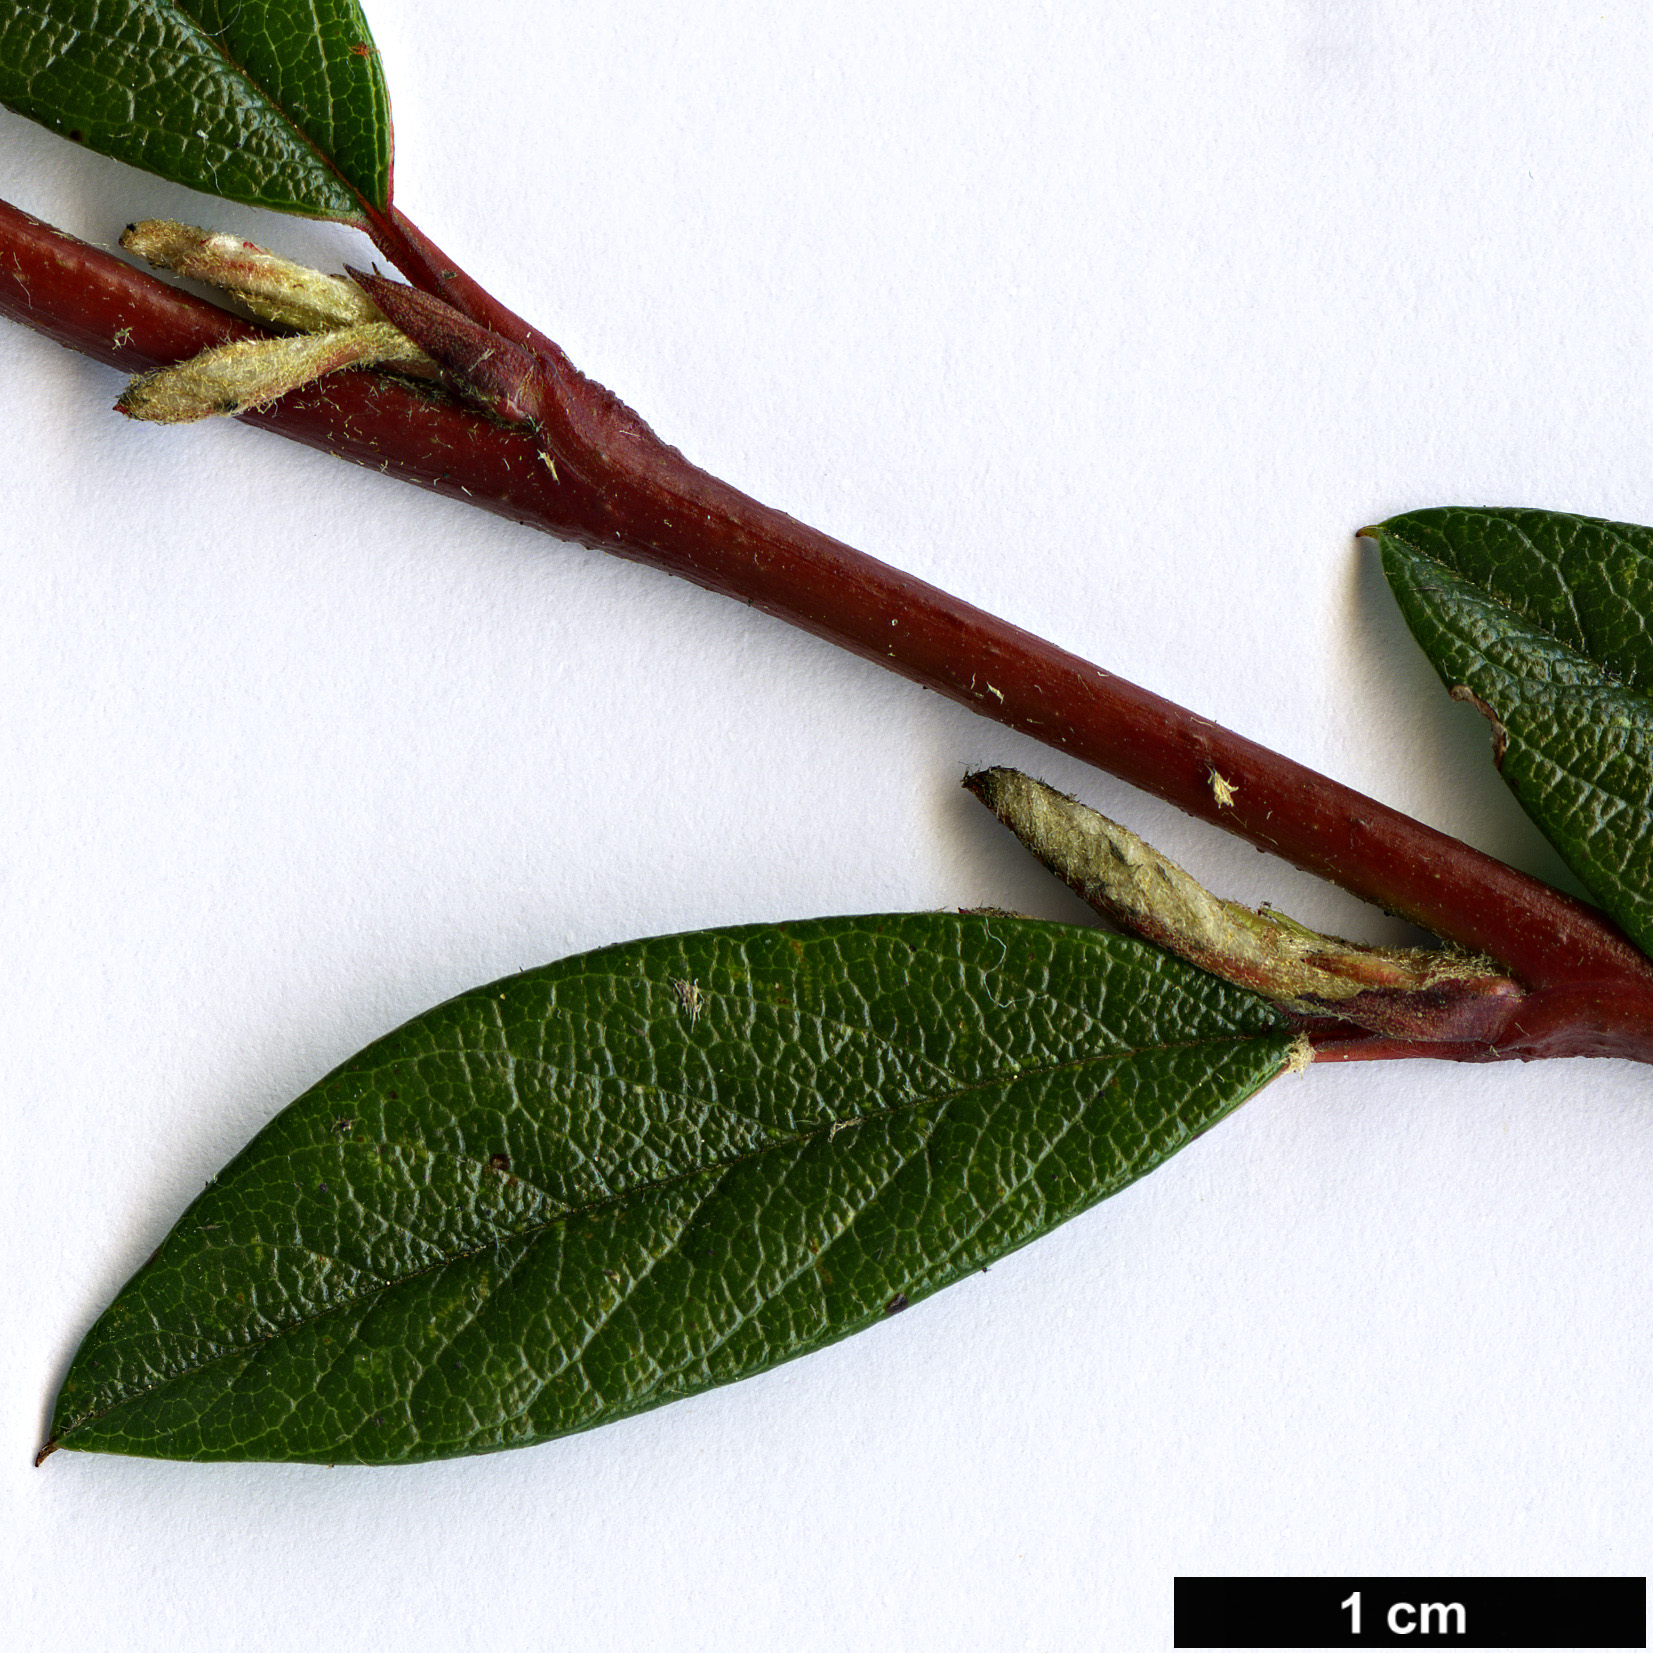 High resolution image: Family: Rosaceae - Genus: Cotoneaster - Taxon: salicifolius - SpeciesSub: ’Parkteppich’